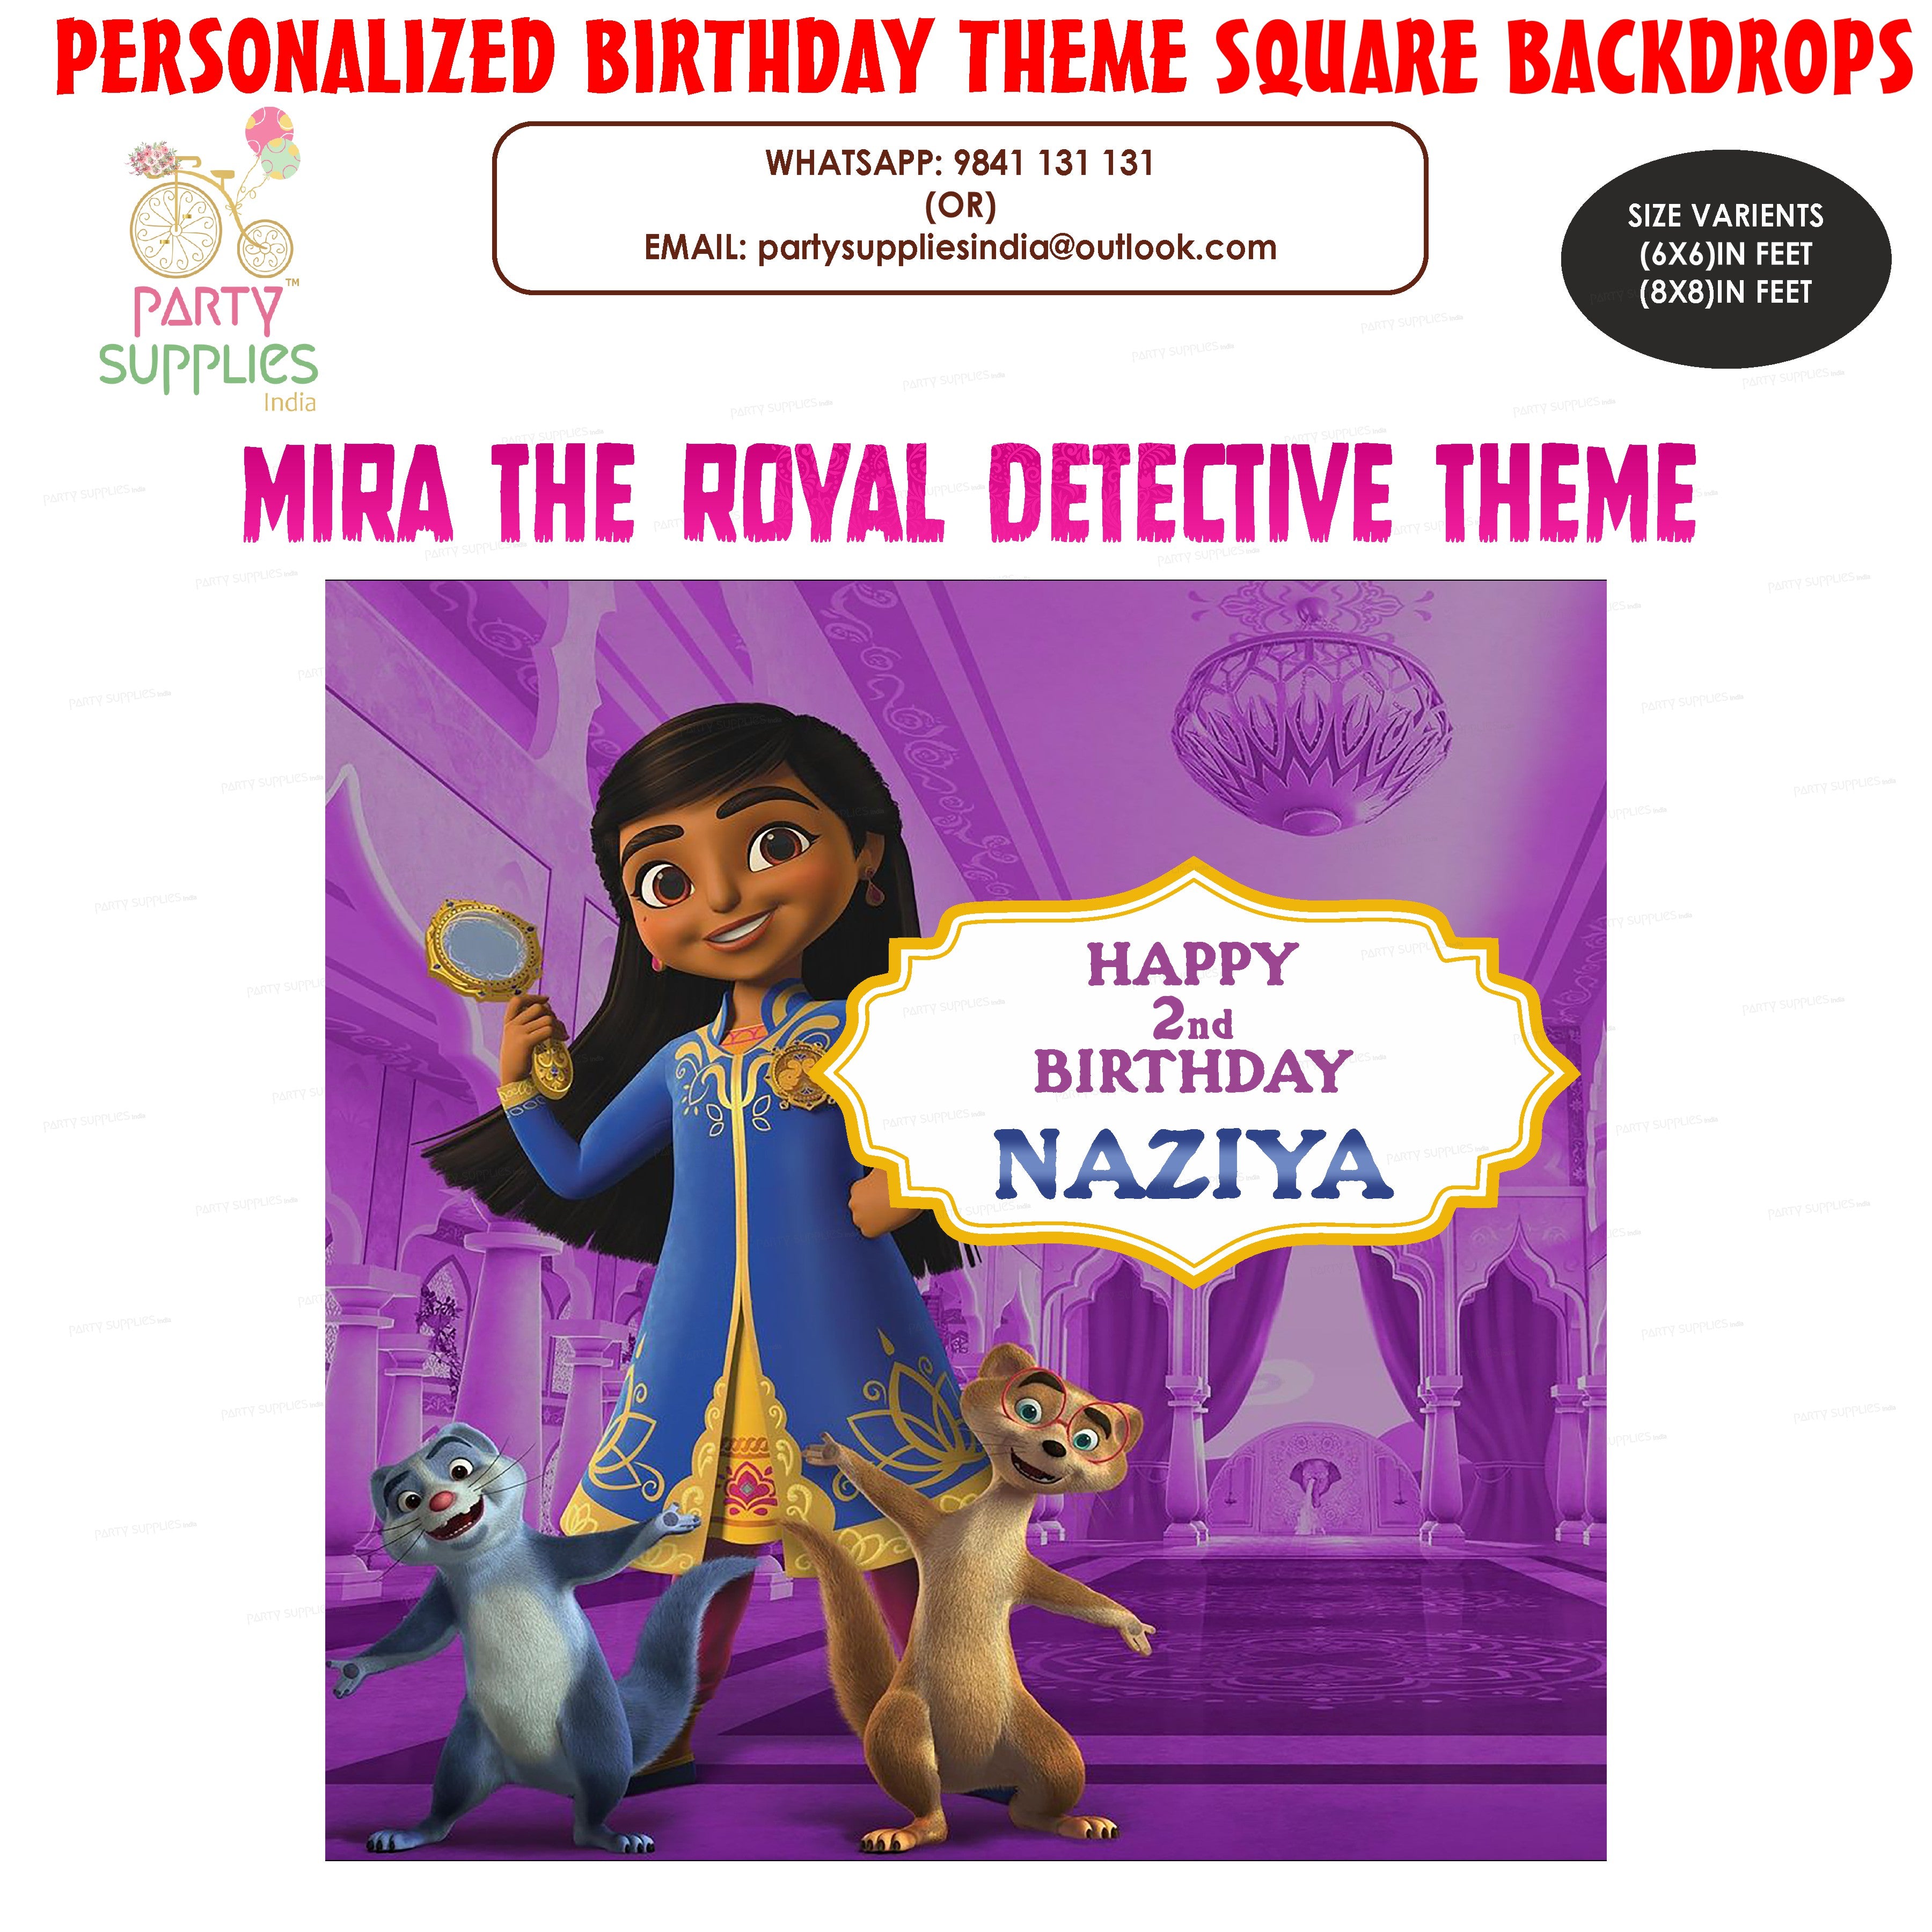 PSI Mira Royal detective Theme Customized Square Backdrop